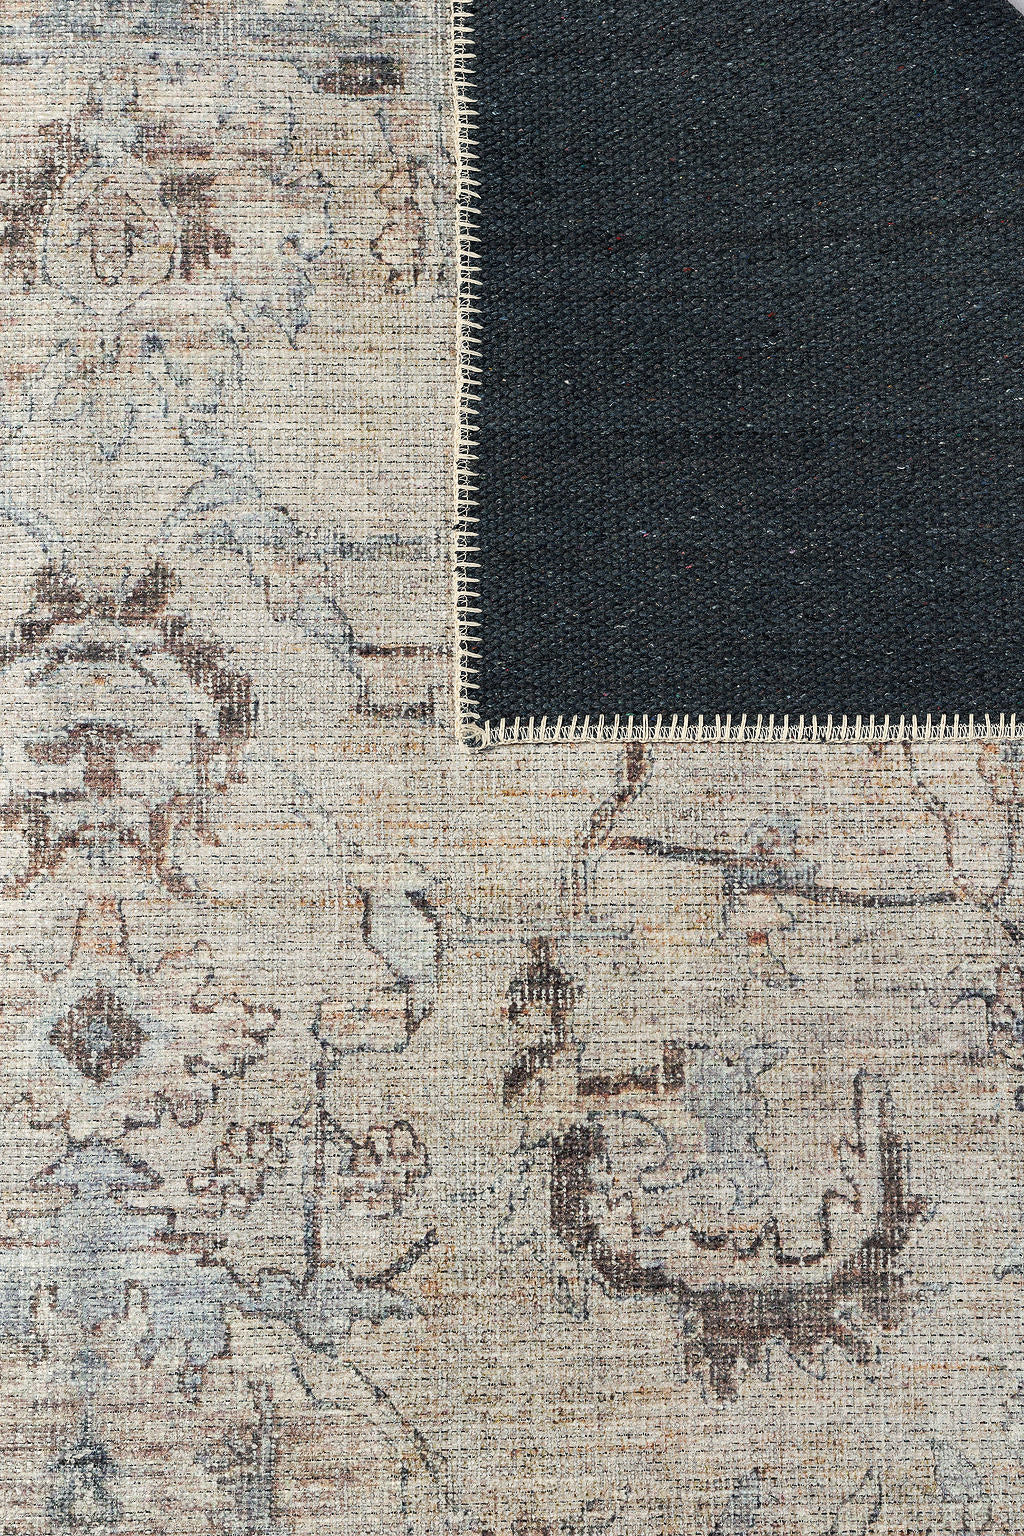 Blue bordered vintage style rug